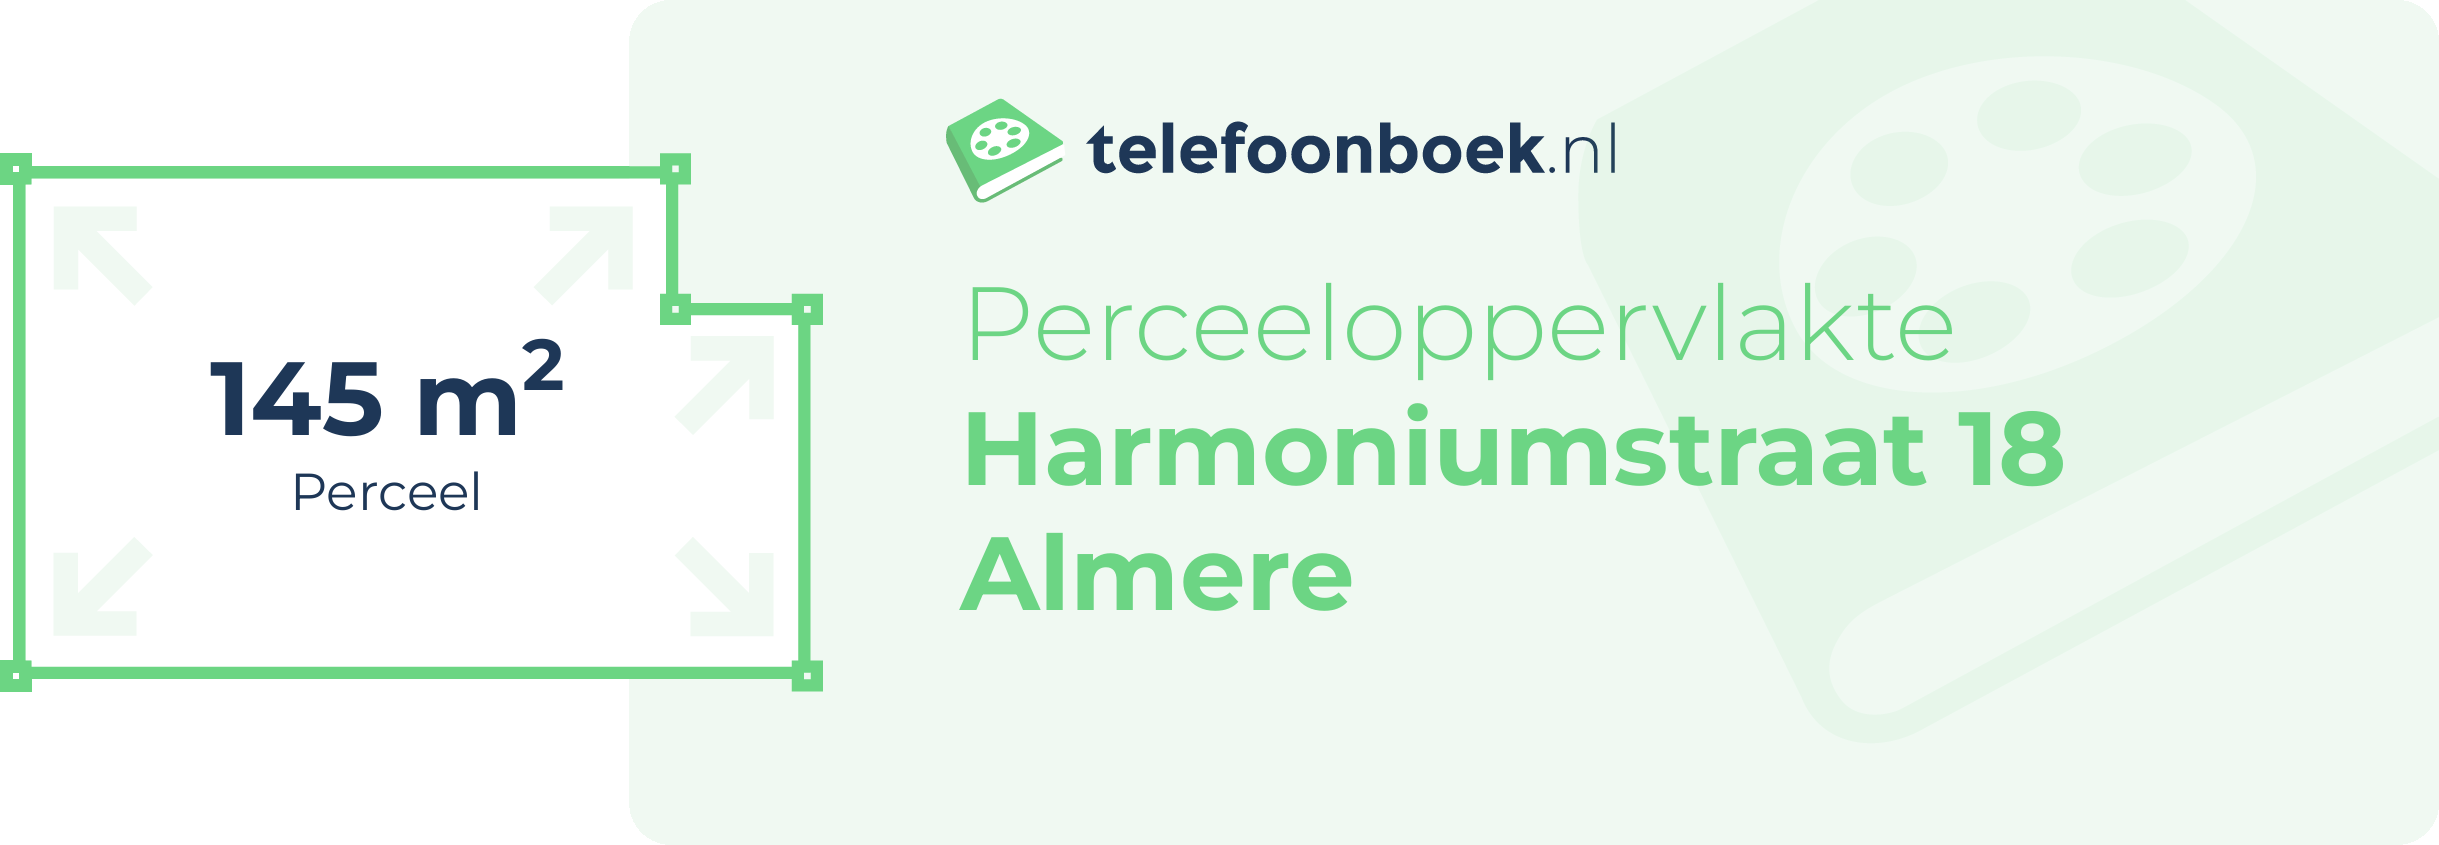 Perceeloppervlakte Harmoniumstraat 18 Almere